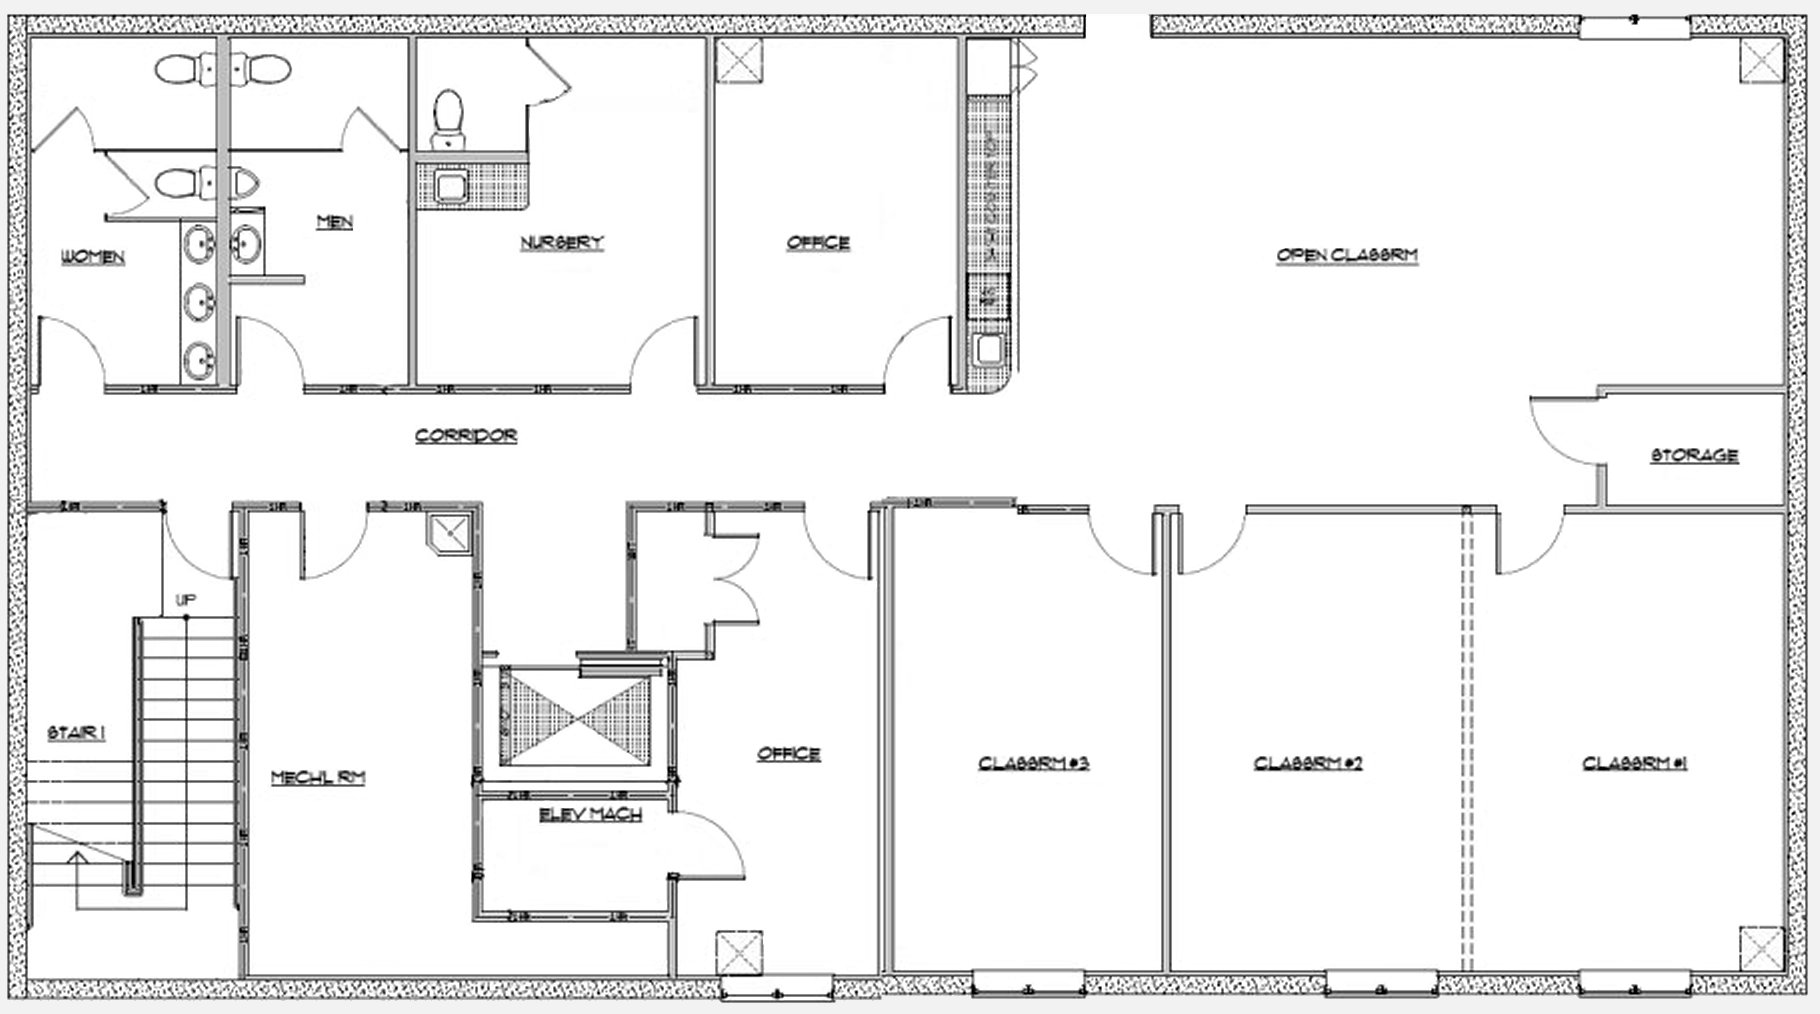 basement floor plans ideas photo - 9